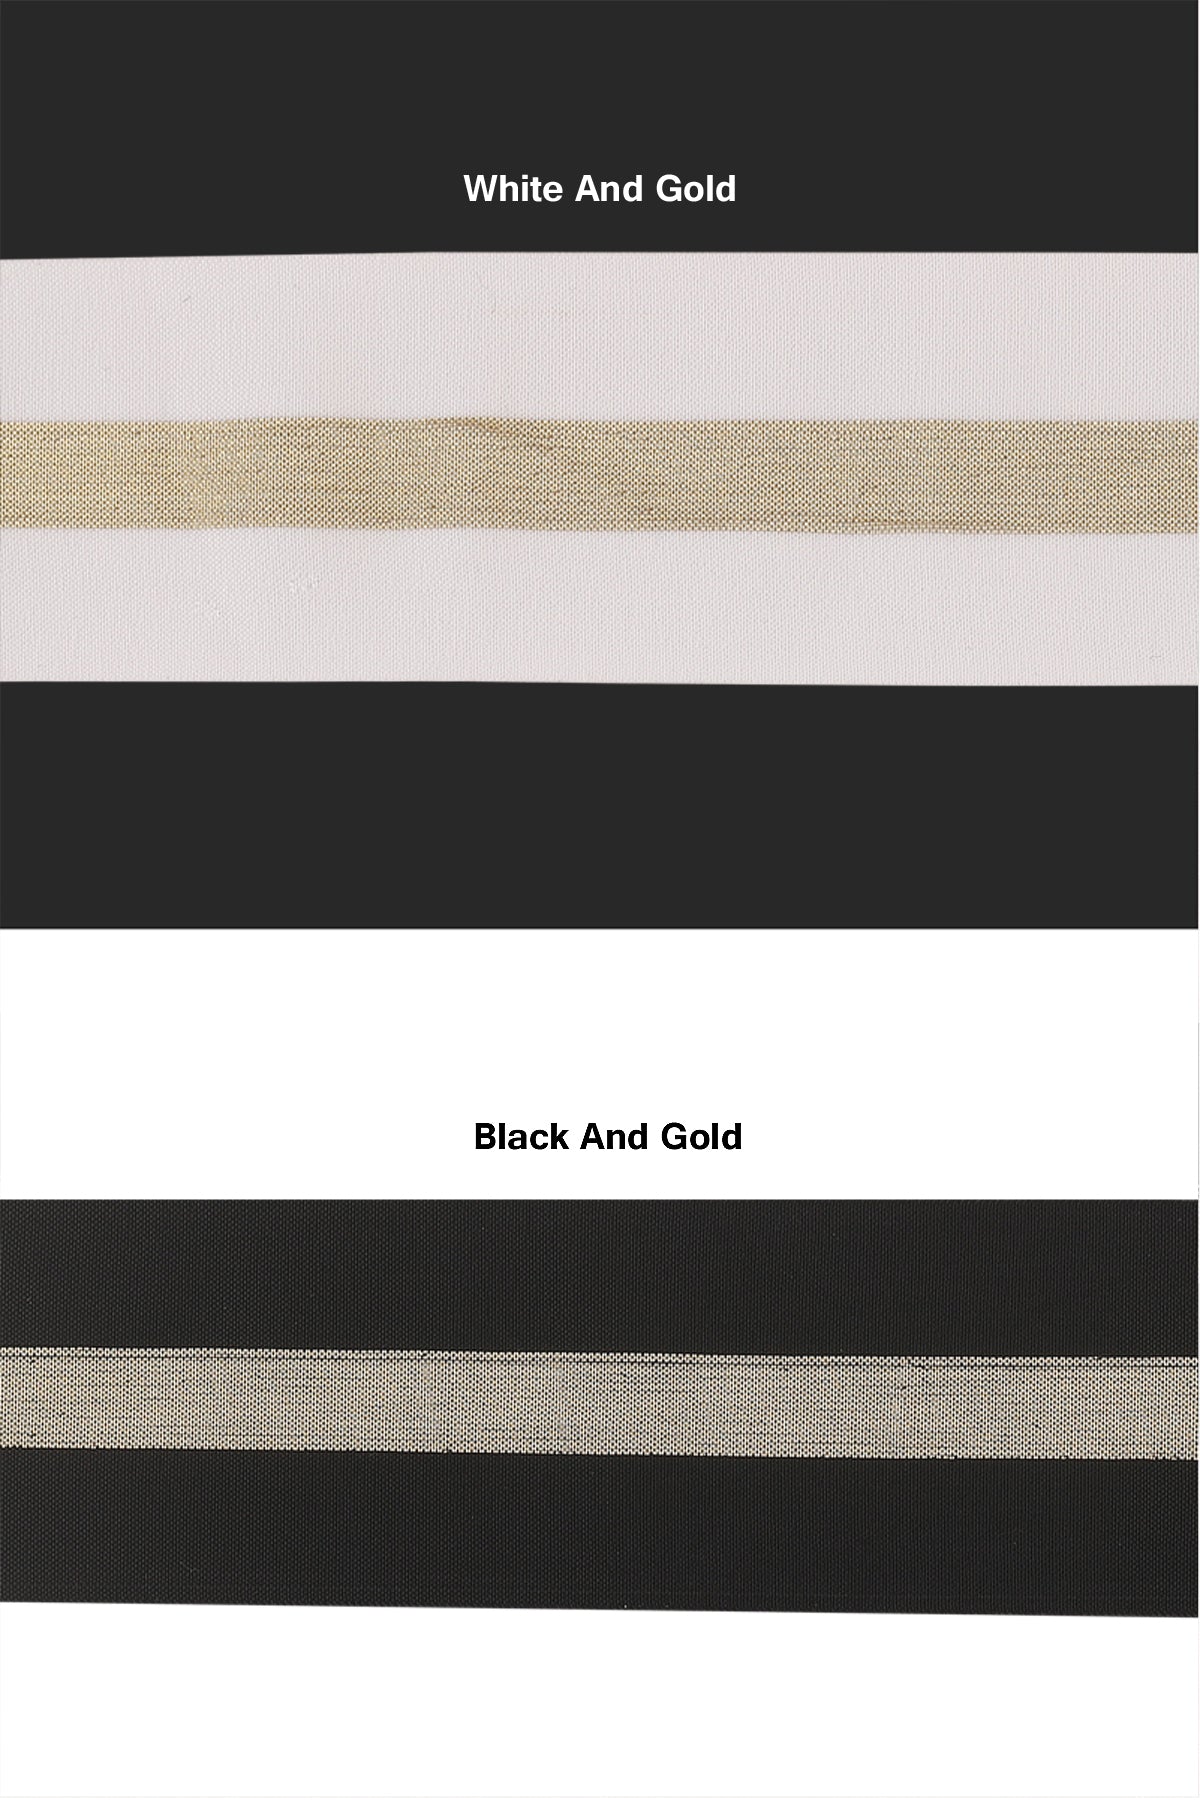 Wide Golden Glitter Striped Soft White & Black Elastic